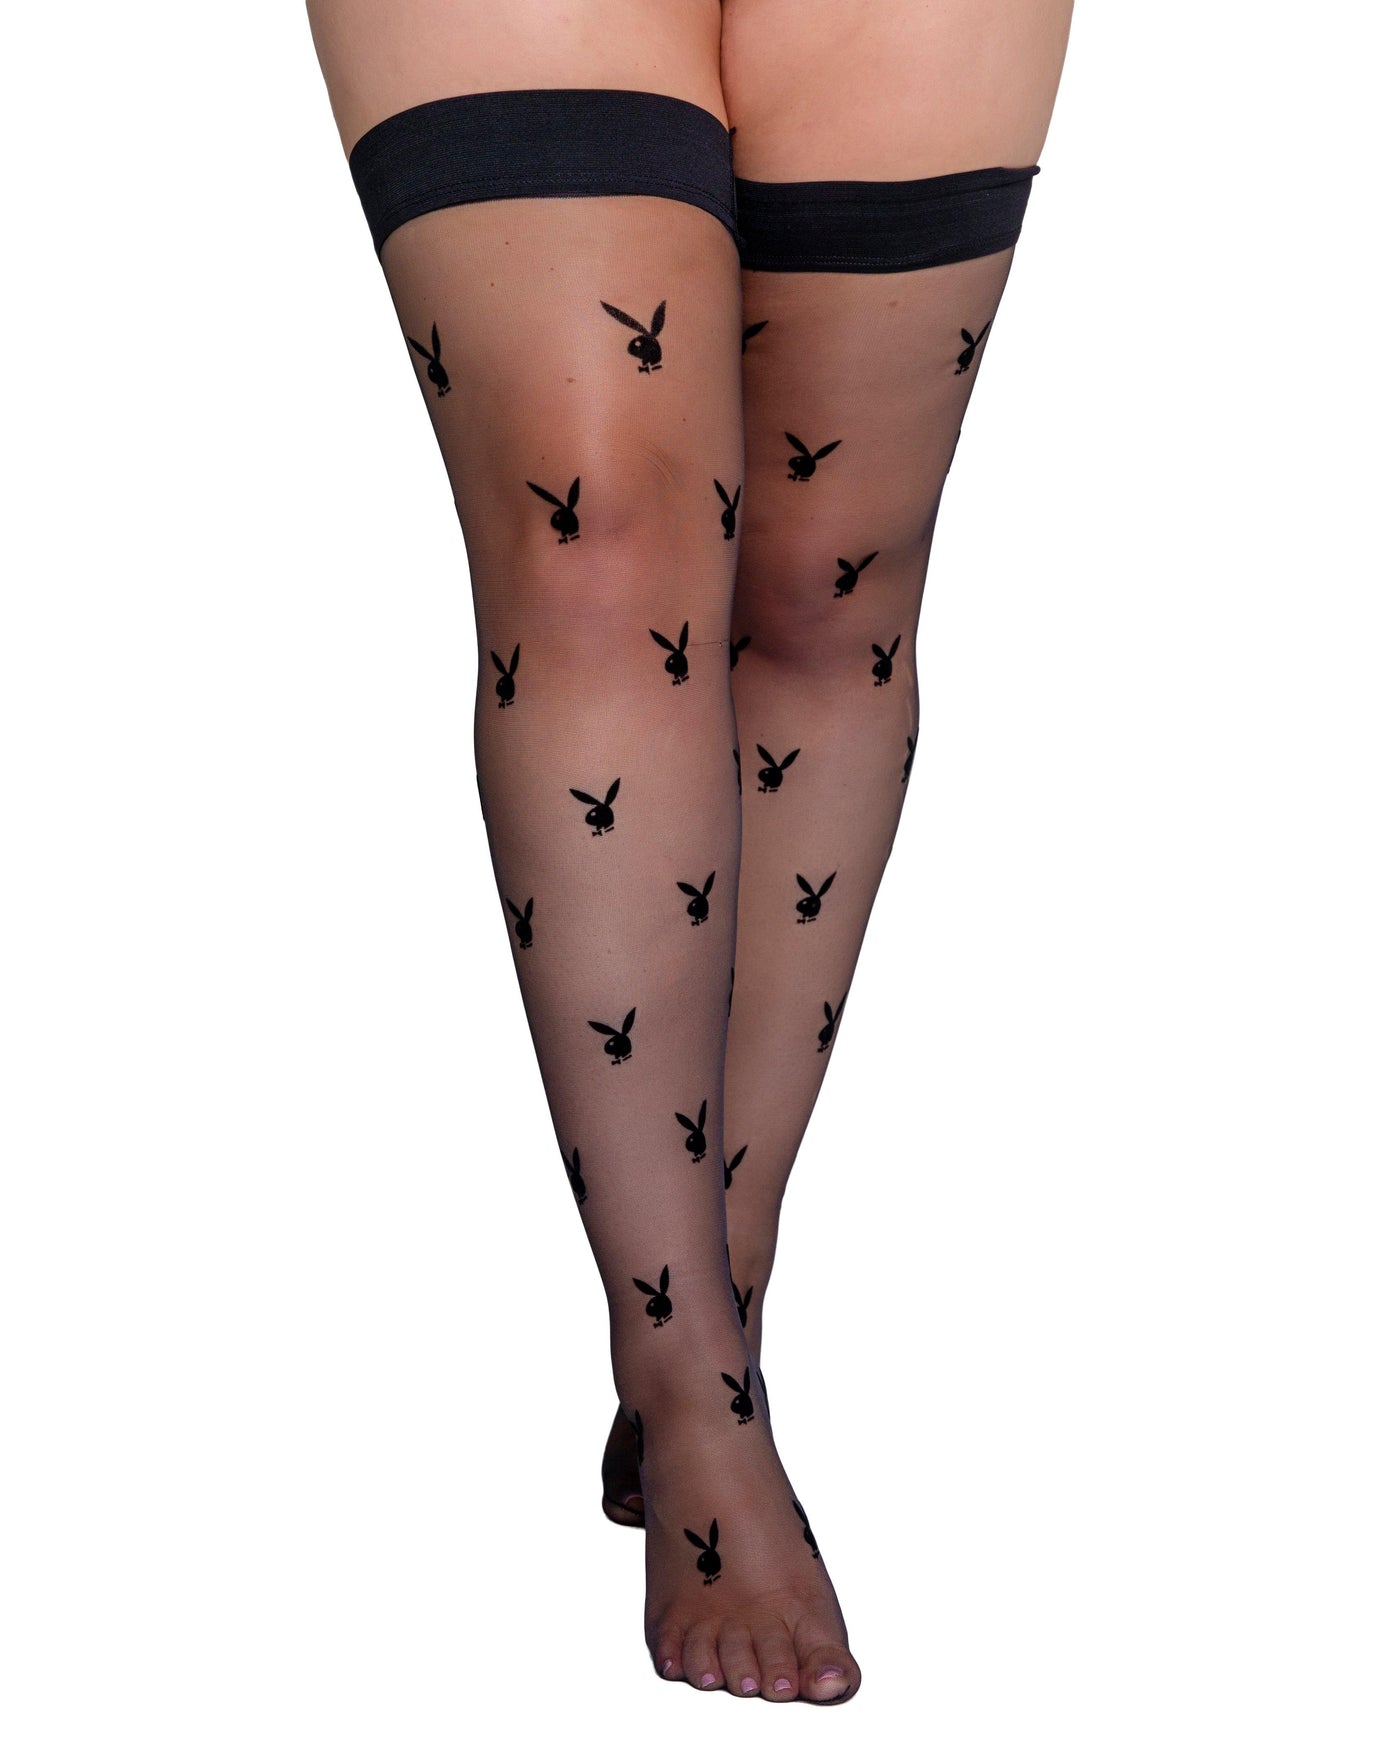 PBLI122 - Playboy Bunny Noir Stockings - AMIClubwear